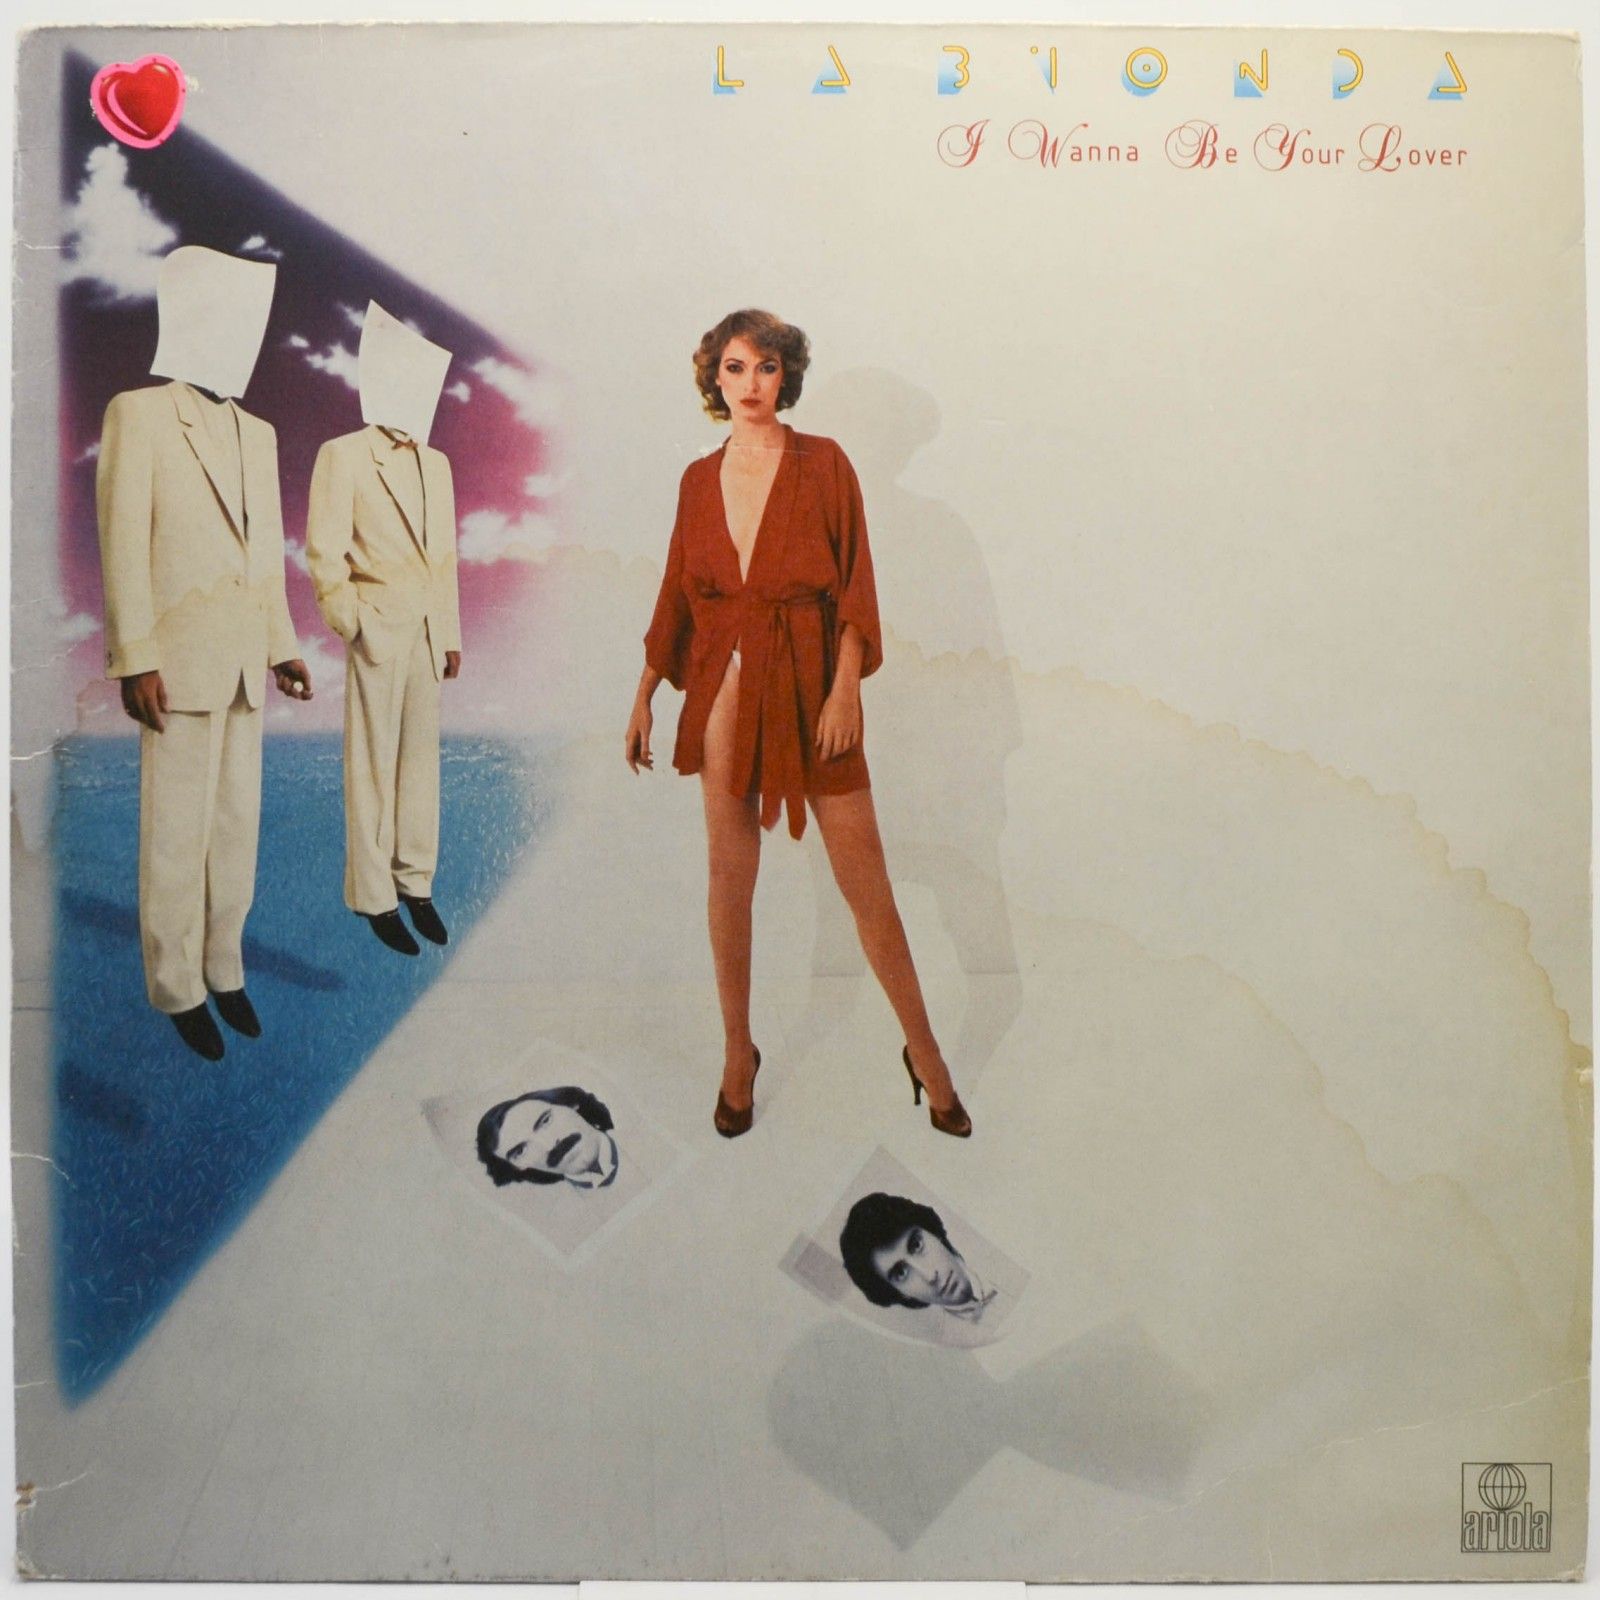 La Bionda — I Wanna Be Your Lover, 1980